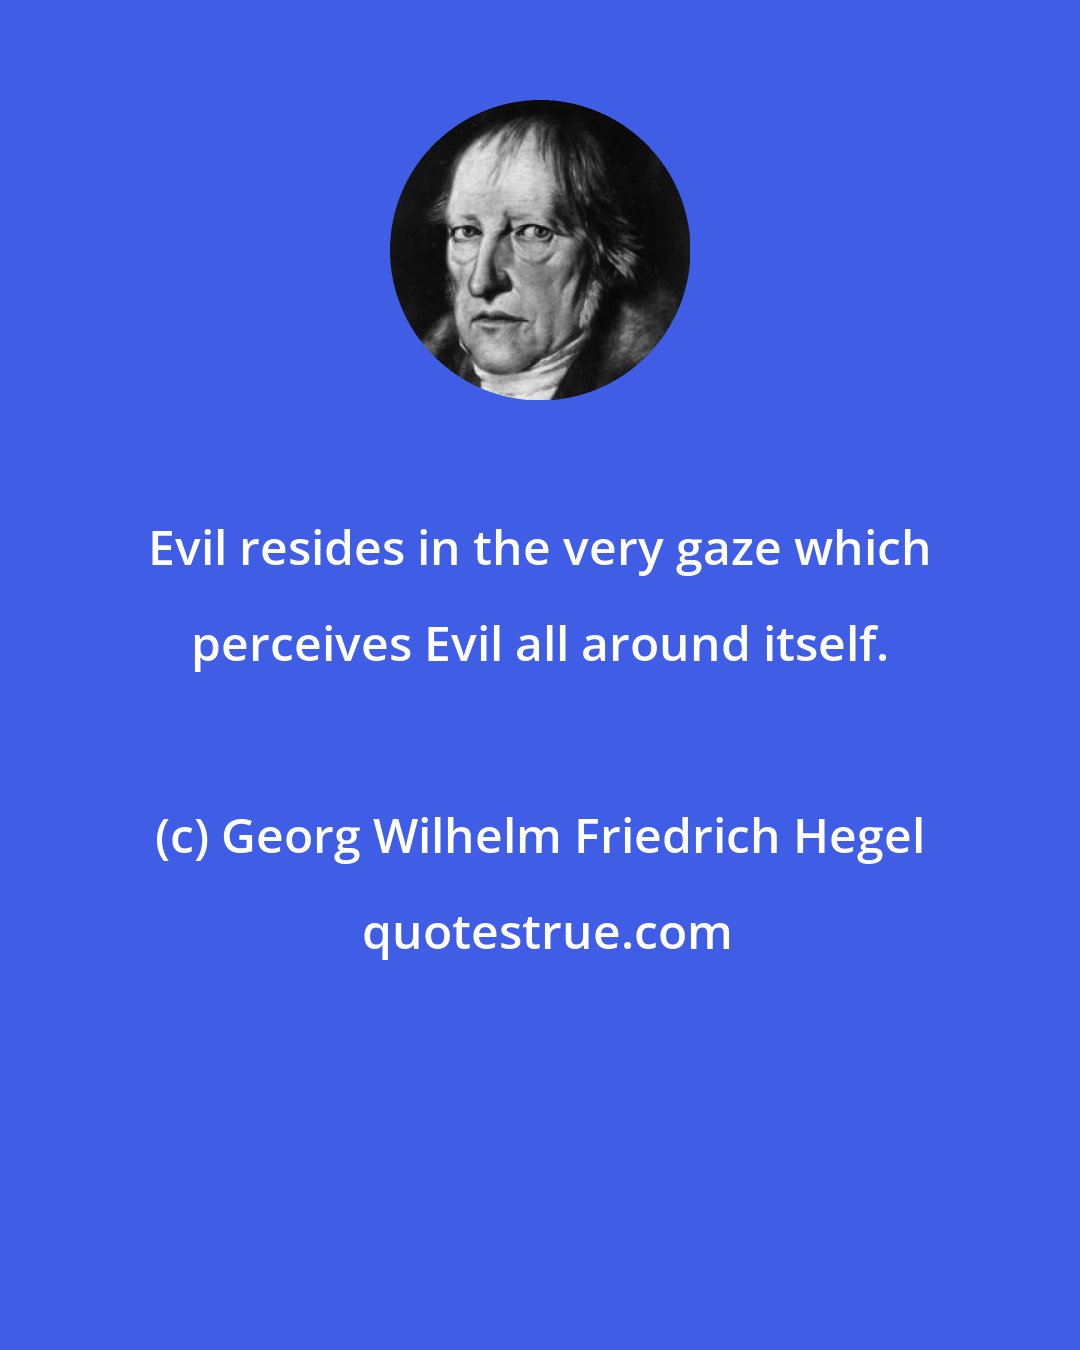 Georg Wilhelm Friedrich Hegel: Evil resides in the very gaze which perceives Evil all around itself.